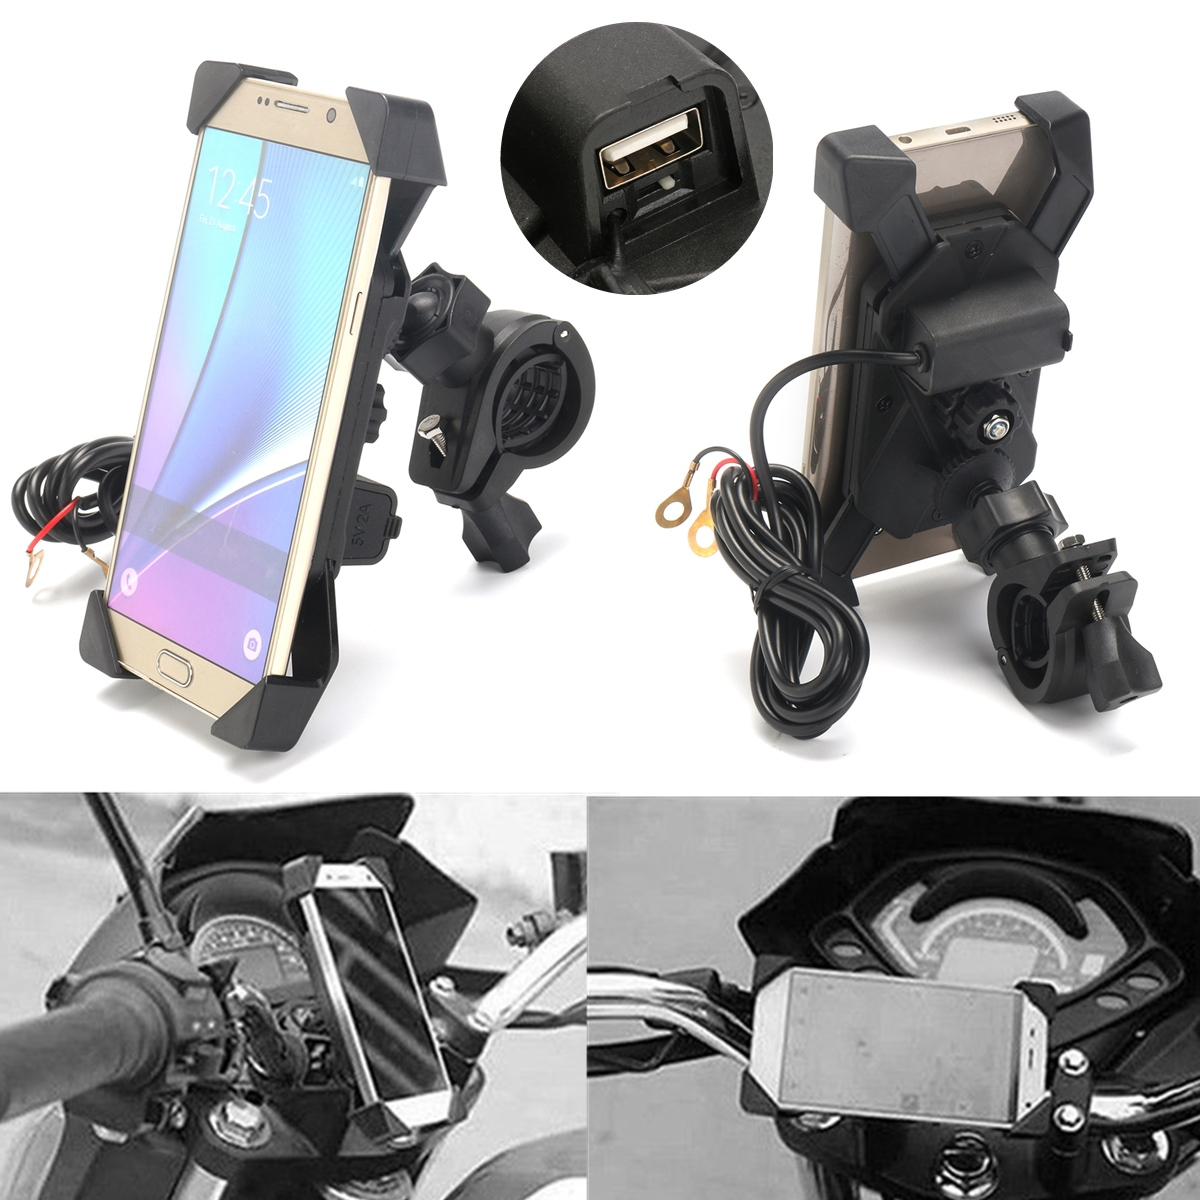 

BIKIGHT 3.5-6in USB-зарядное устройство для велосипедов Мобильный телефон для крепления мобильного телефона для iPhone X, XS, XR, iPhone 7 / Plus, Sa